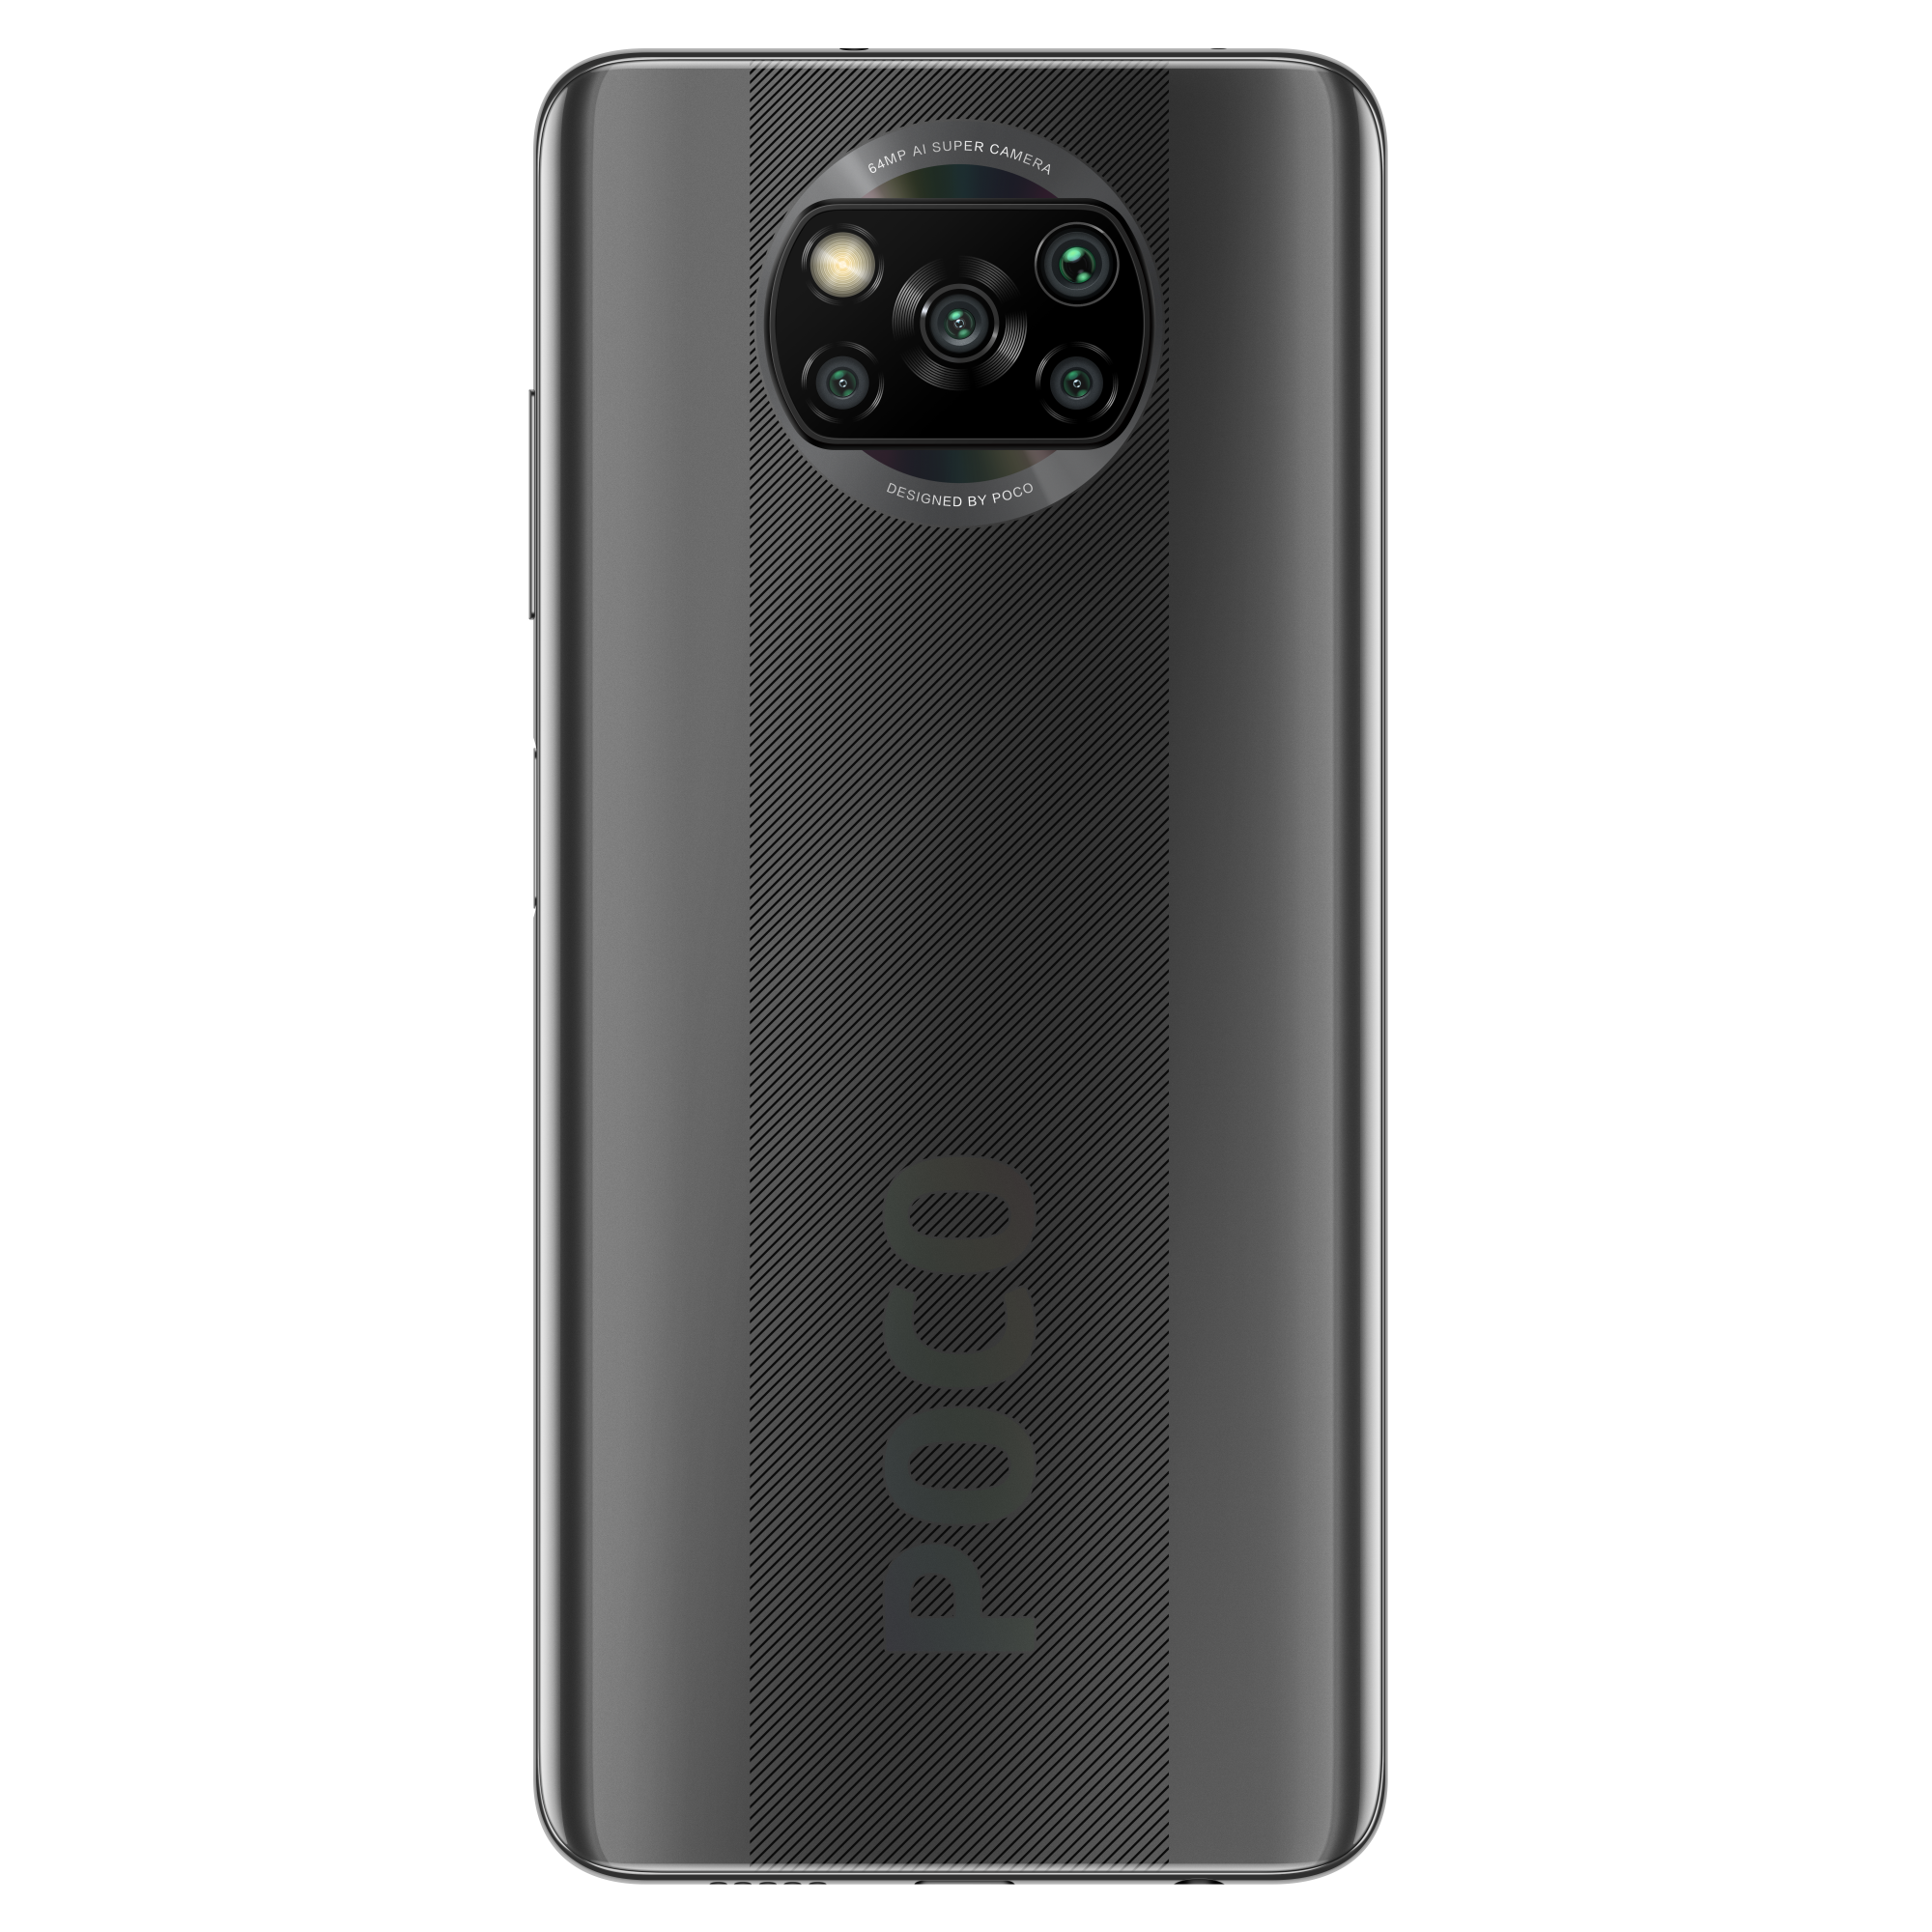 POCO X3 NFC harga RM